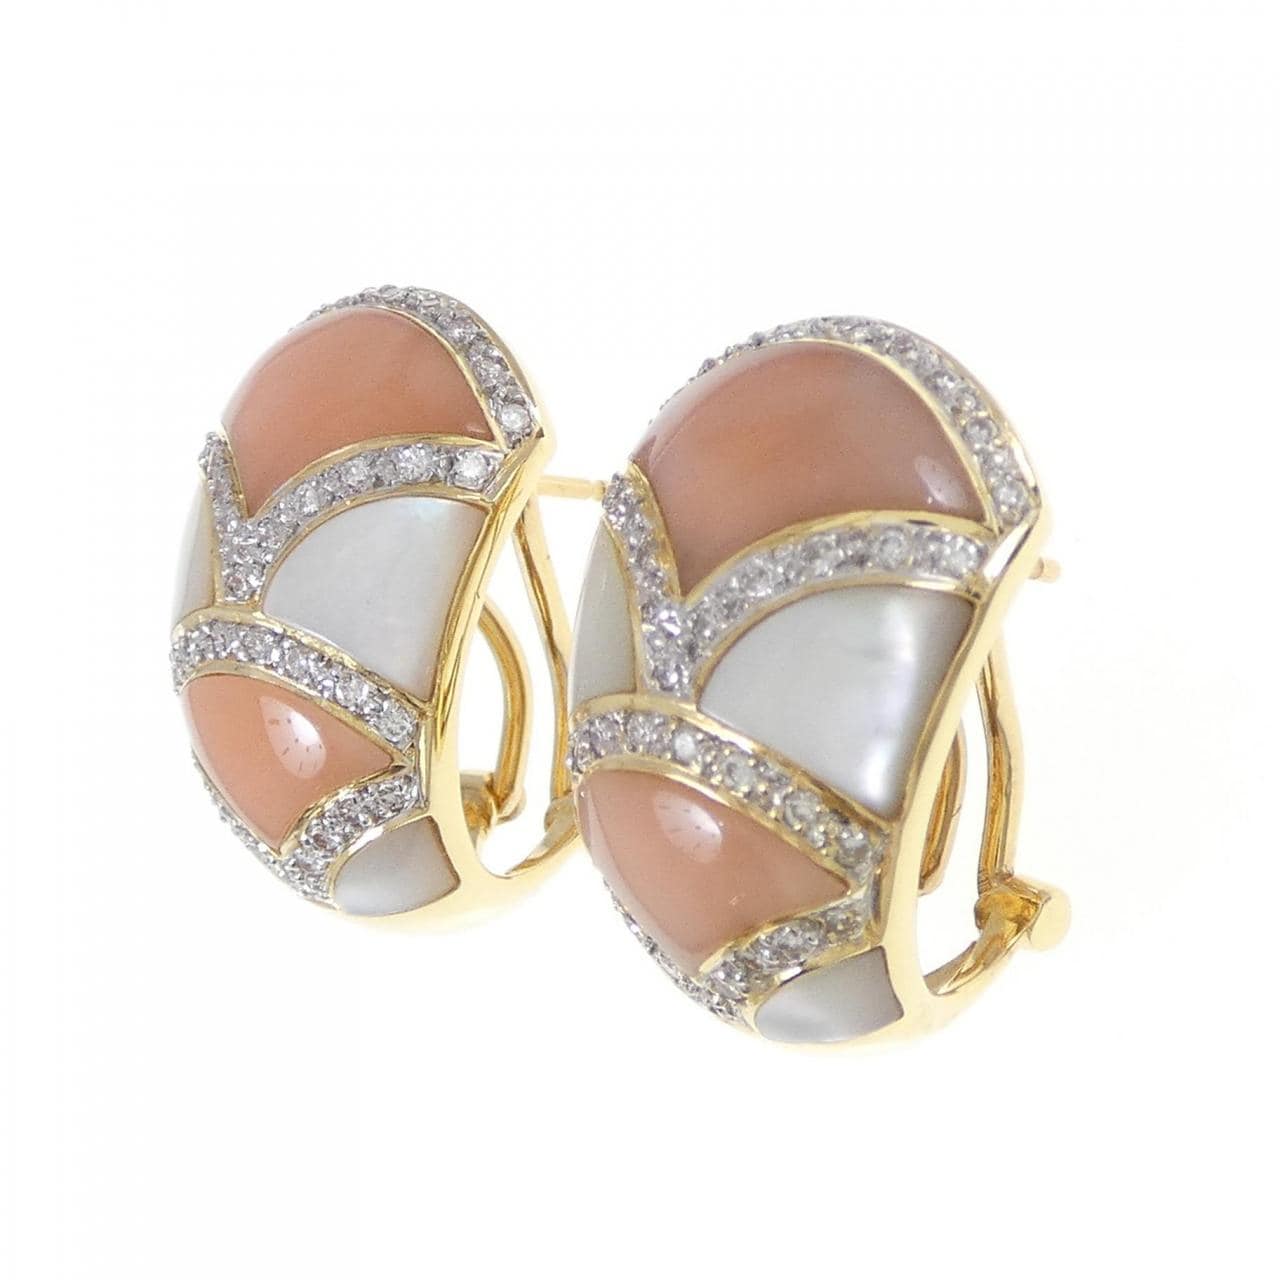 K18YG/K18WG colored stone earrings